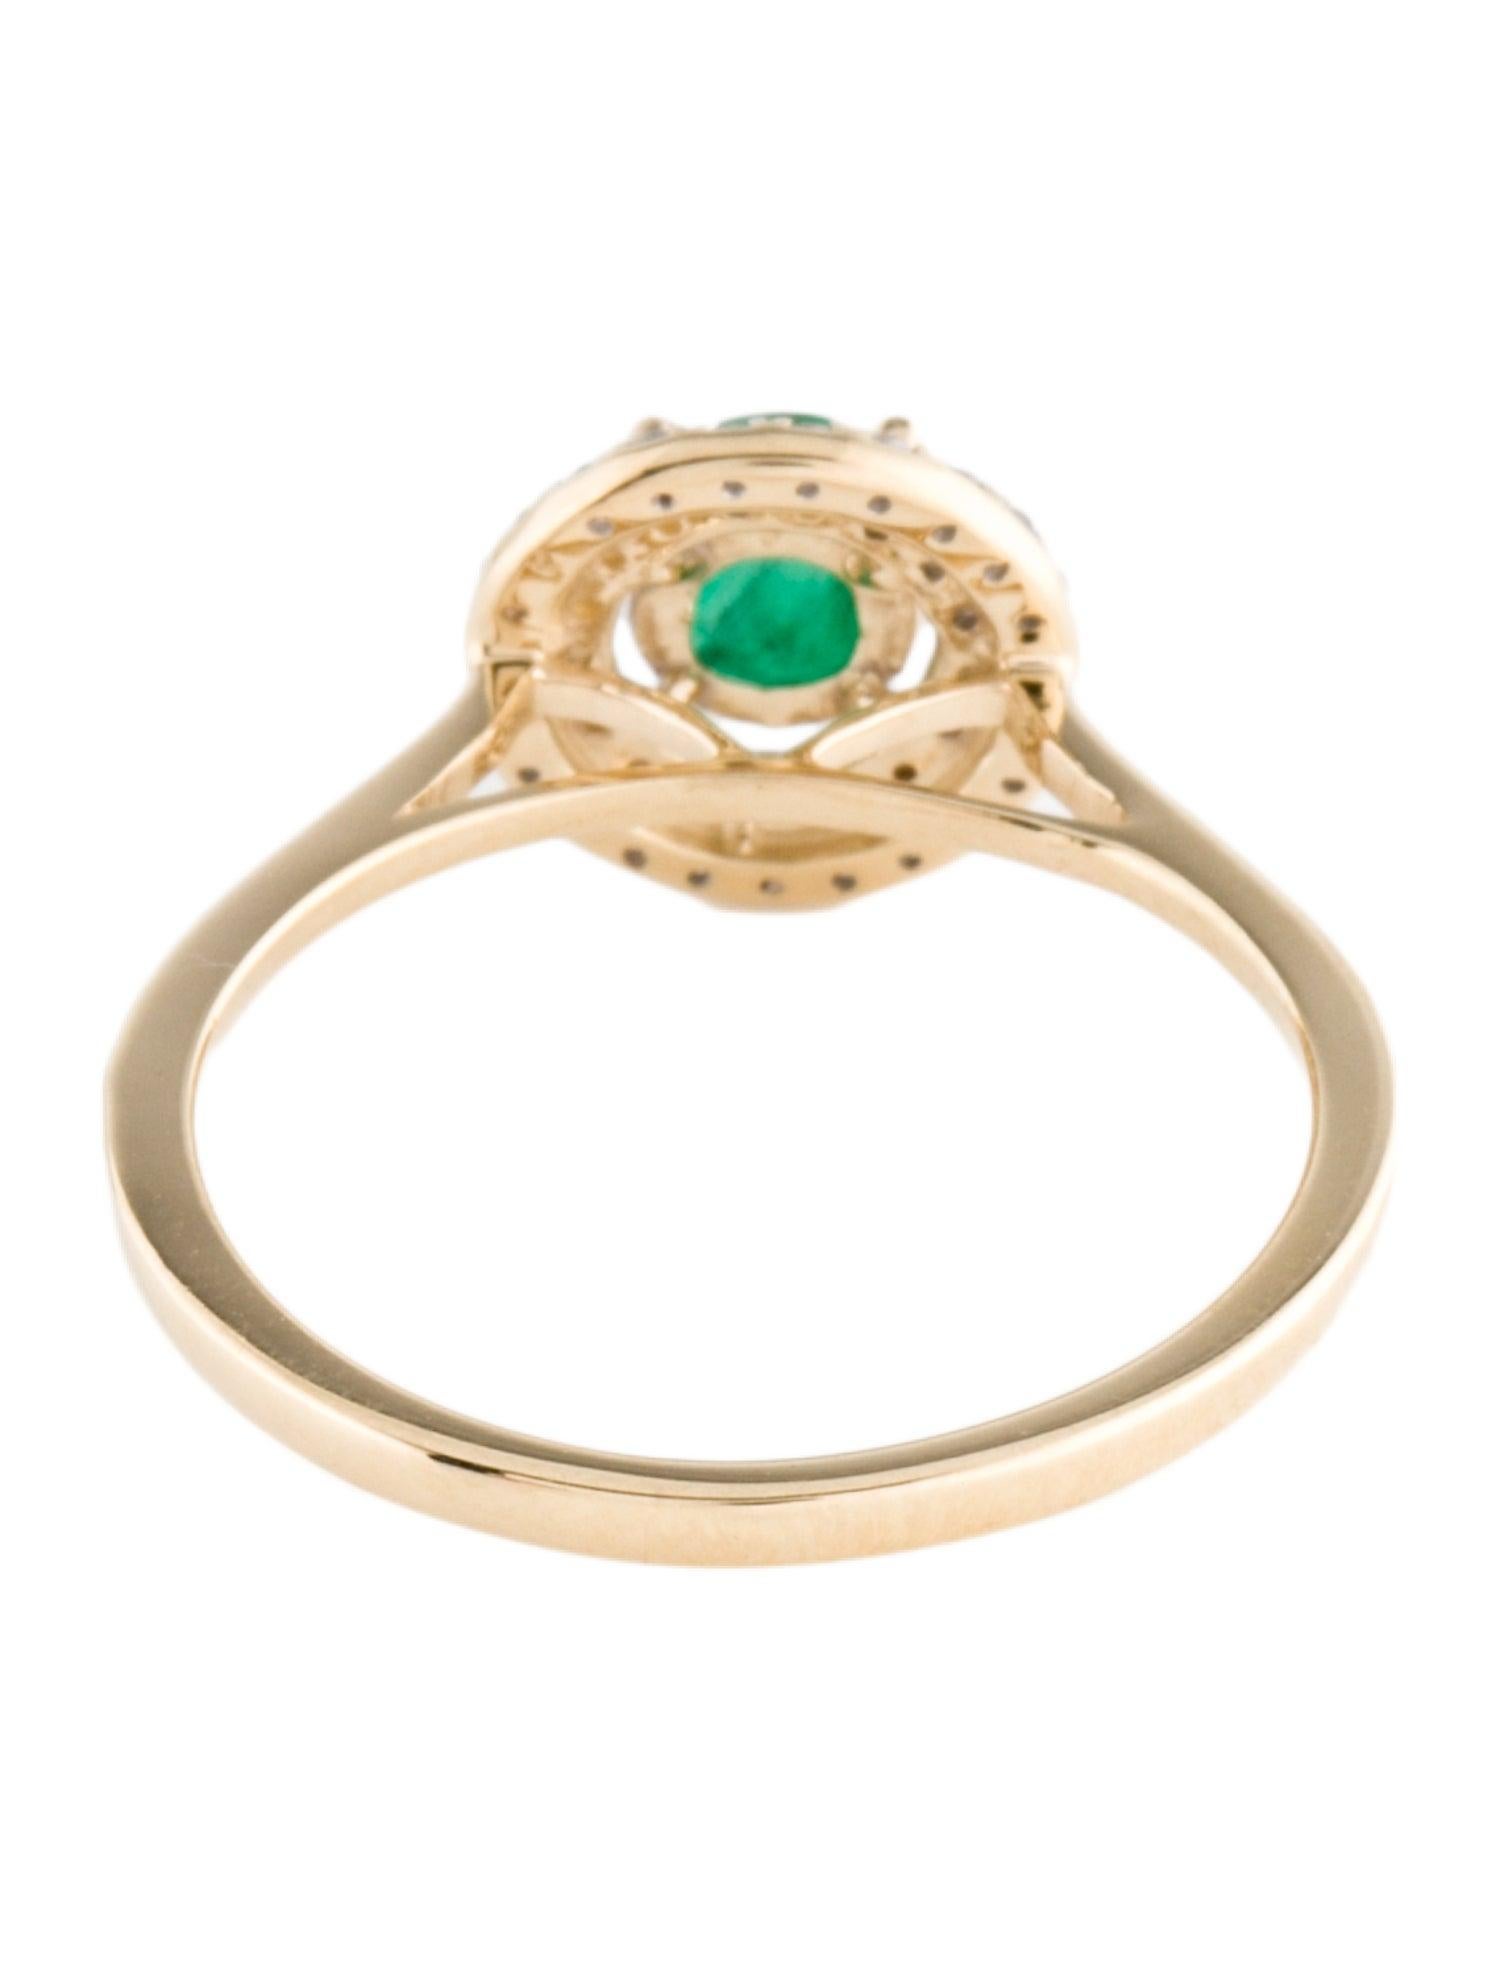 Brilliant Cut Luxurious 14K Emerald & Diamond Cocktail Ring - Size 6.25  Elegant Vintage Ring For Sale